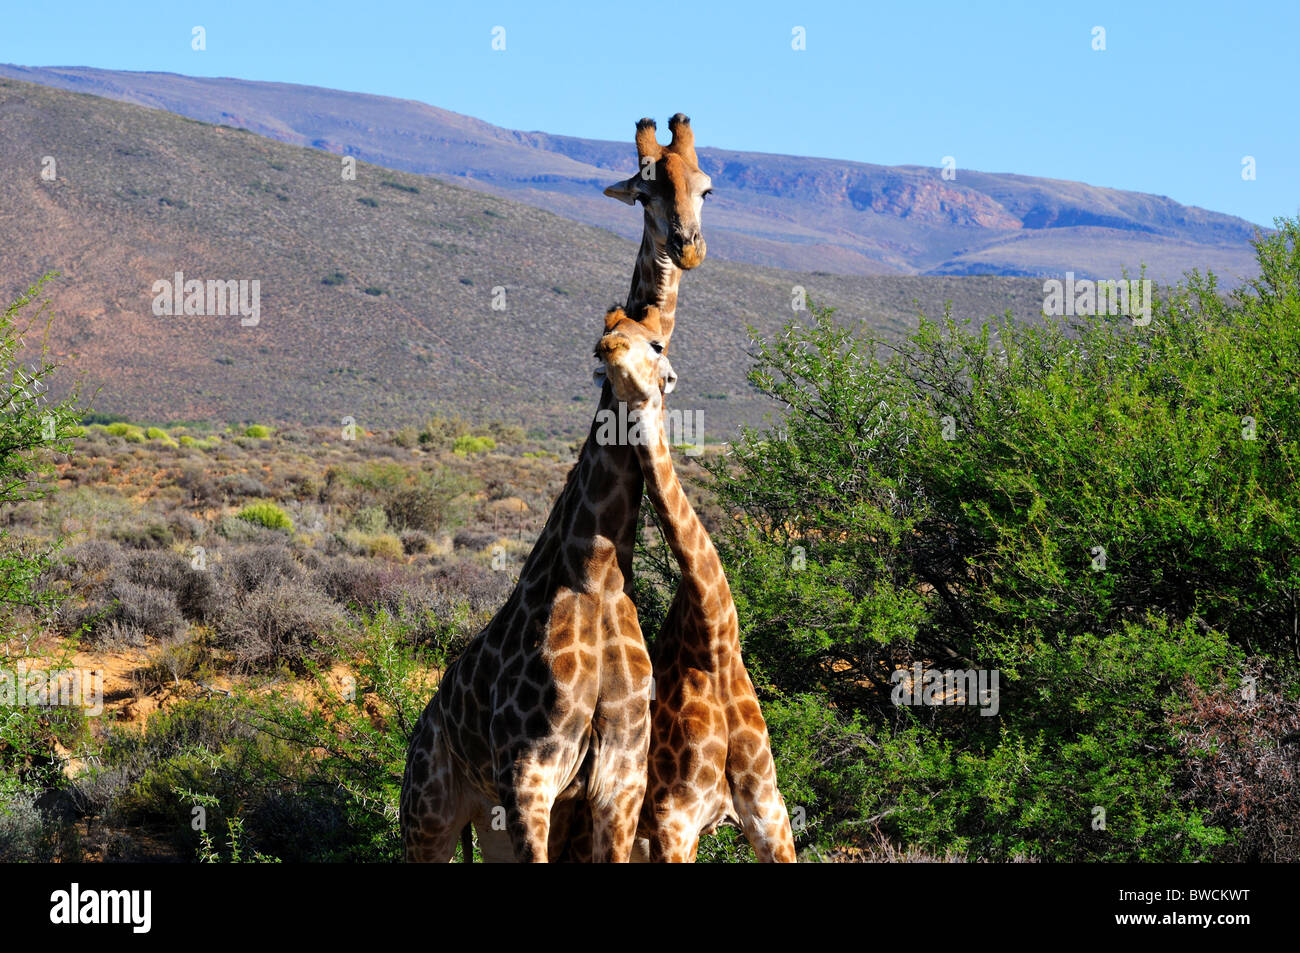 Two giraffes cross their necks. South Africa. Stock Photo